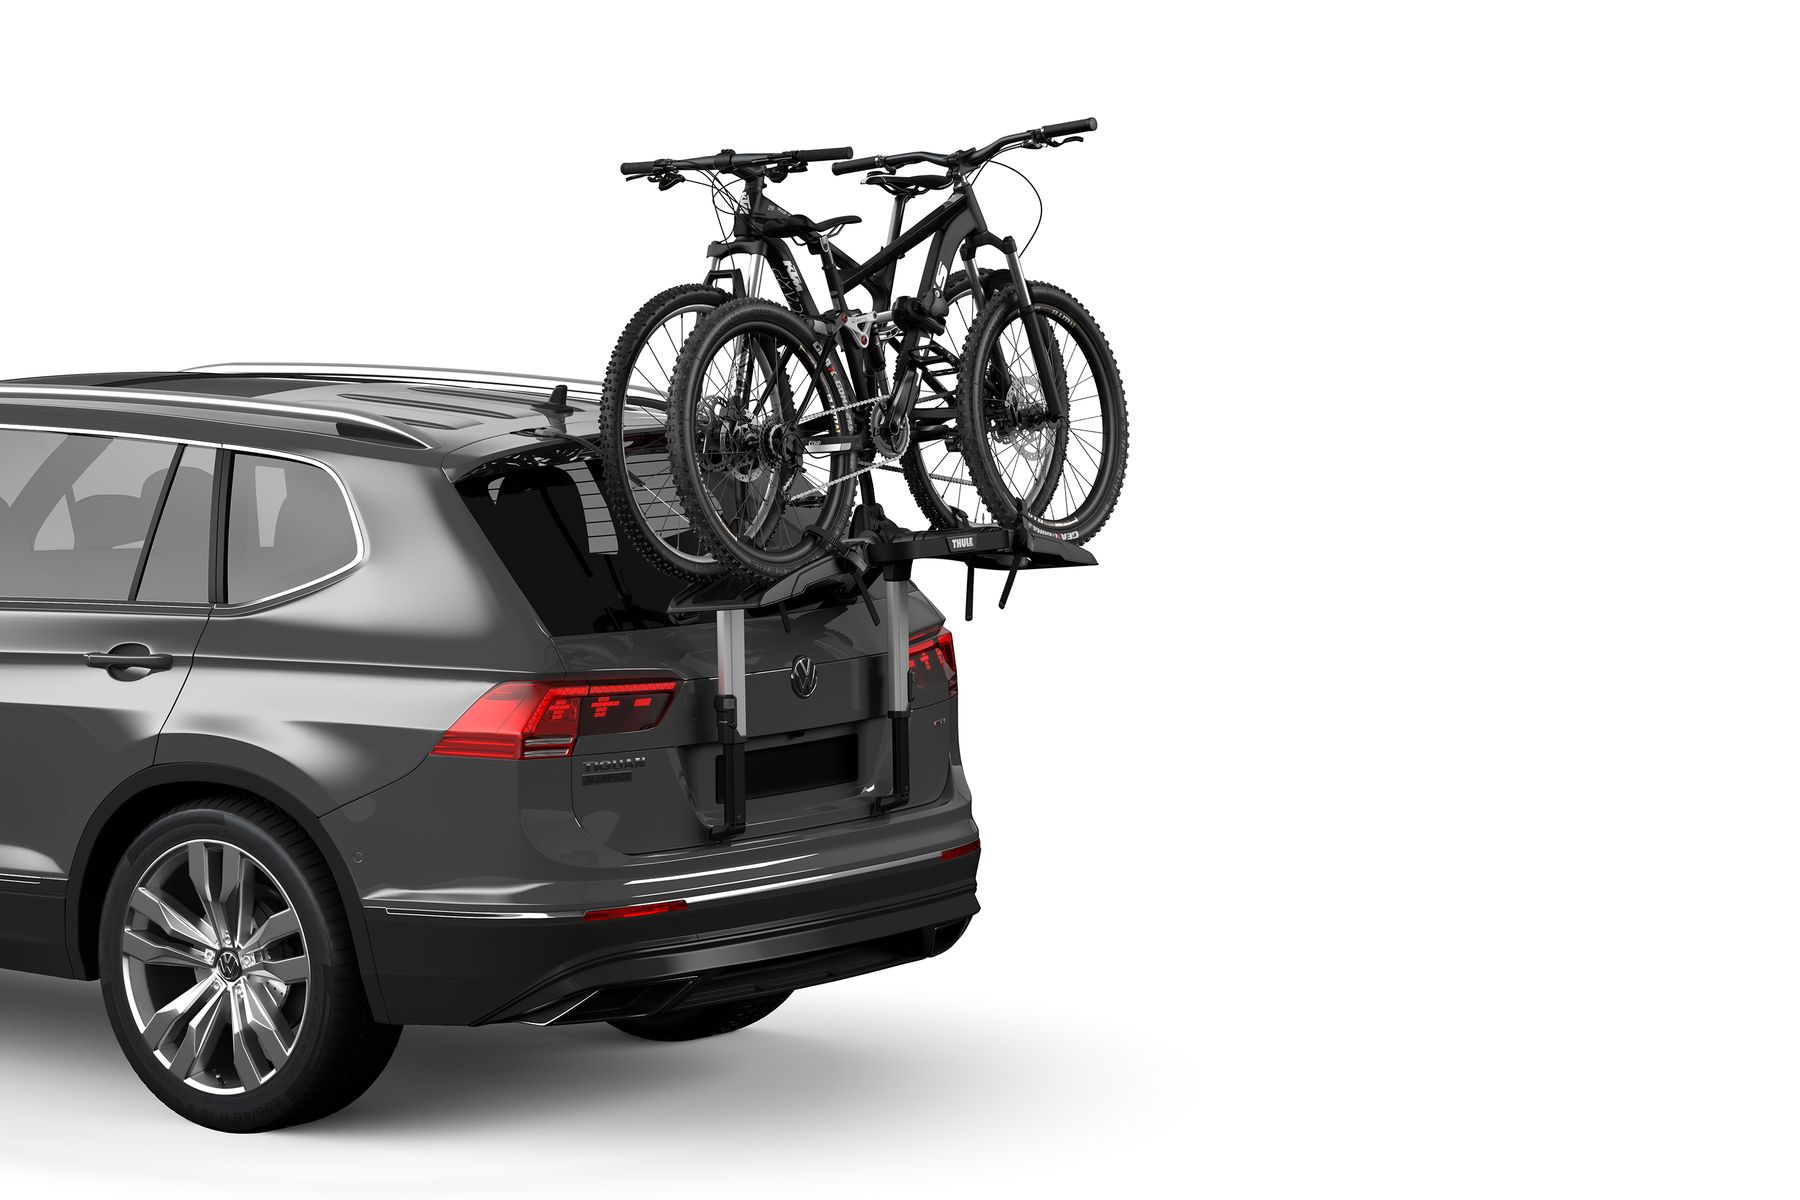 2-Bicycle Bike Trunk Mounted Bike Rack Sturdy Carrier Car SUVs Sedans NEW 